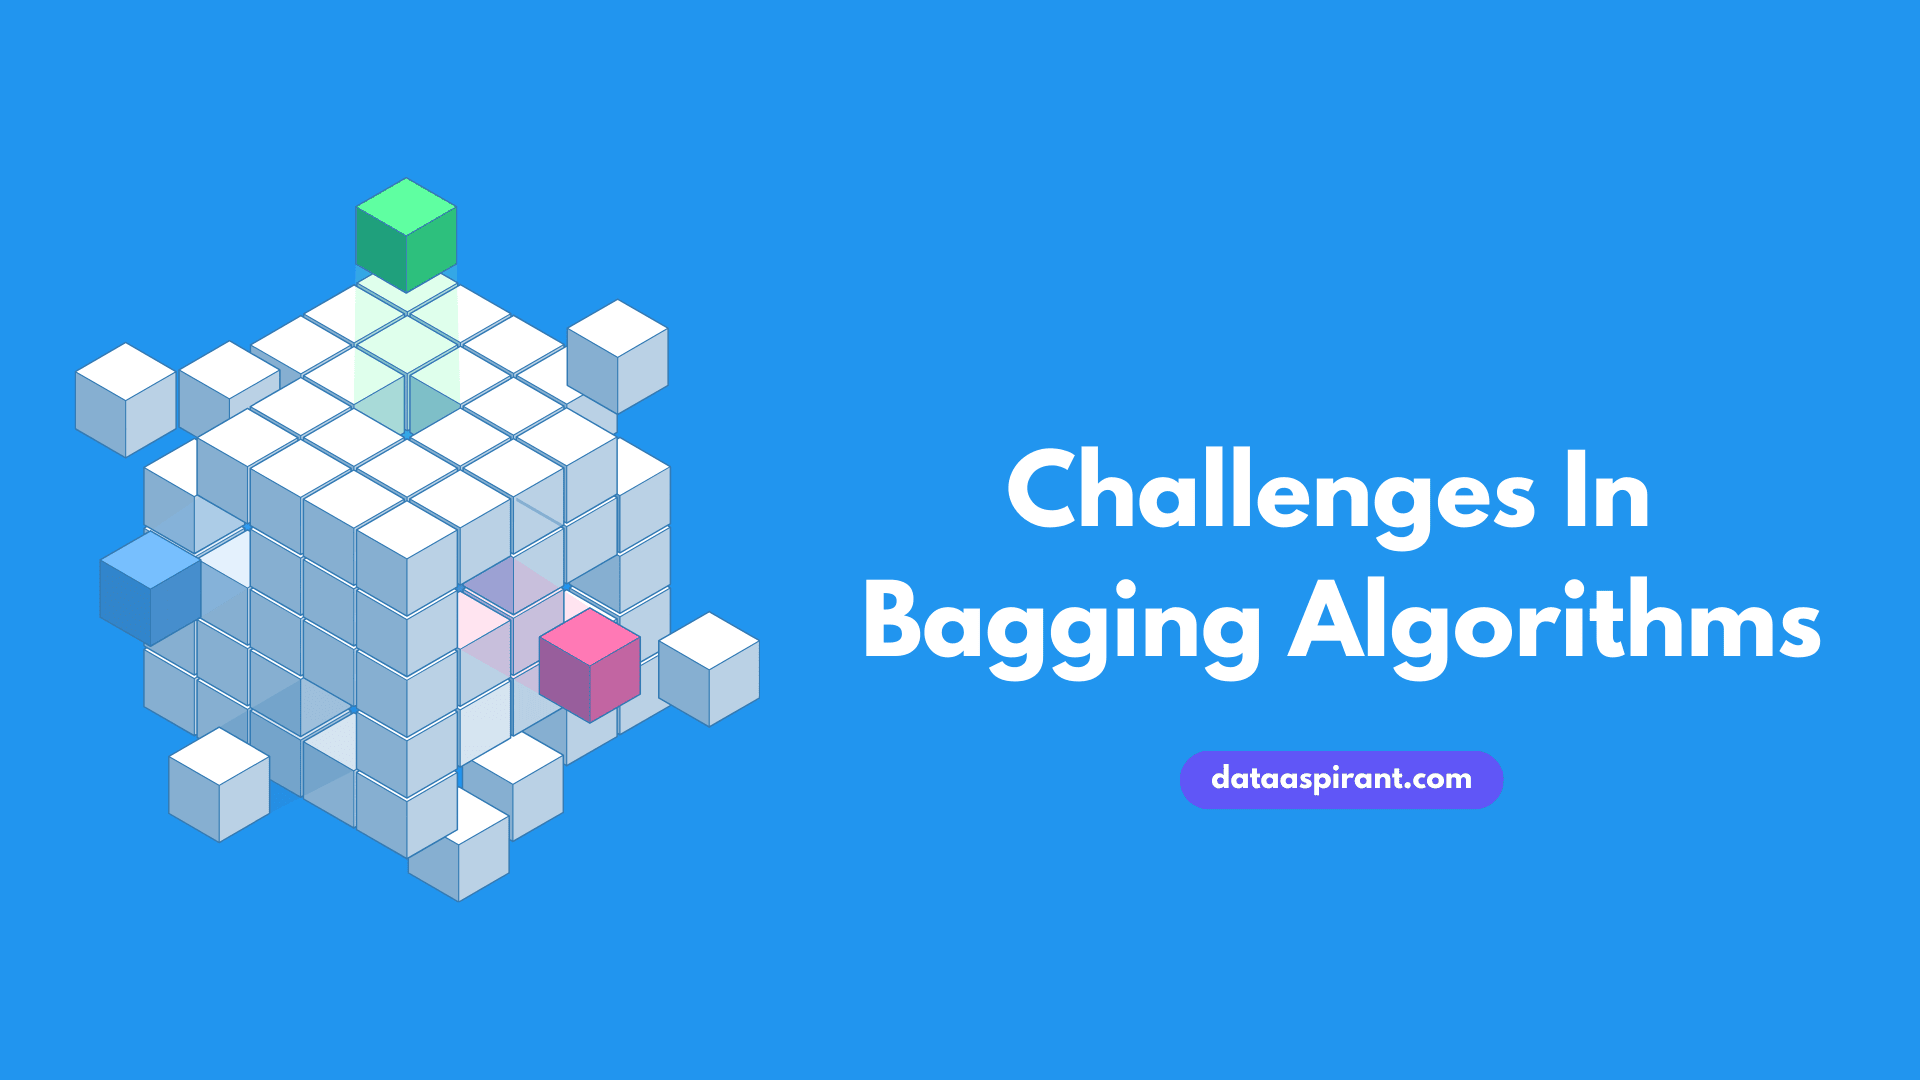 Challenges in Bagging Algorithms